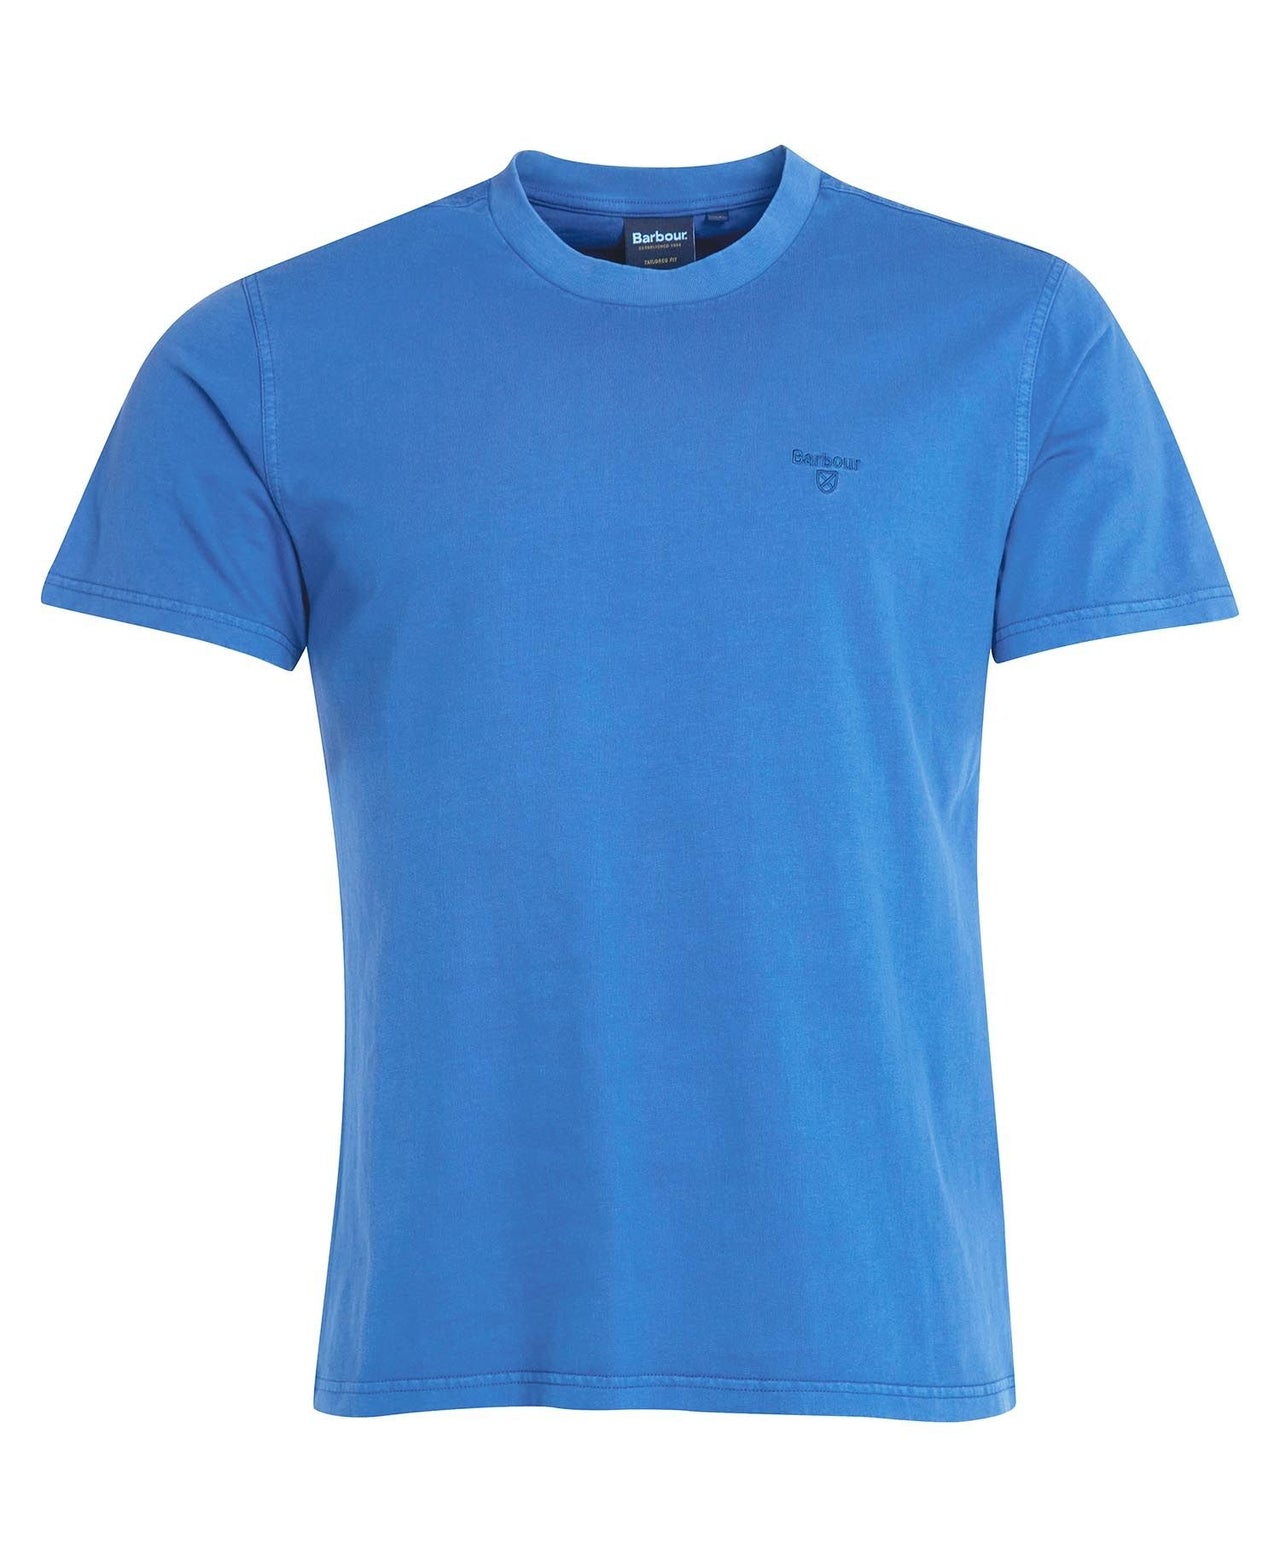 BARBOUR Garment Dyed T-Shirt MARINE